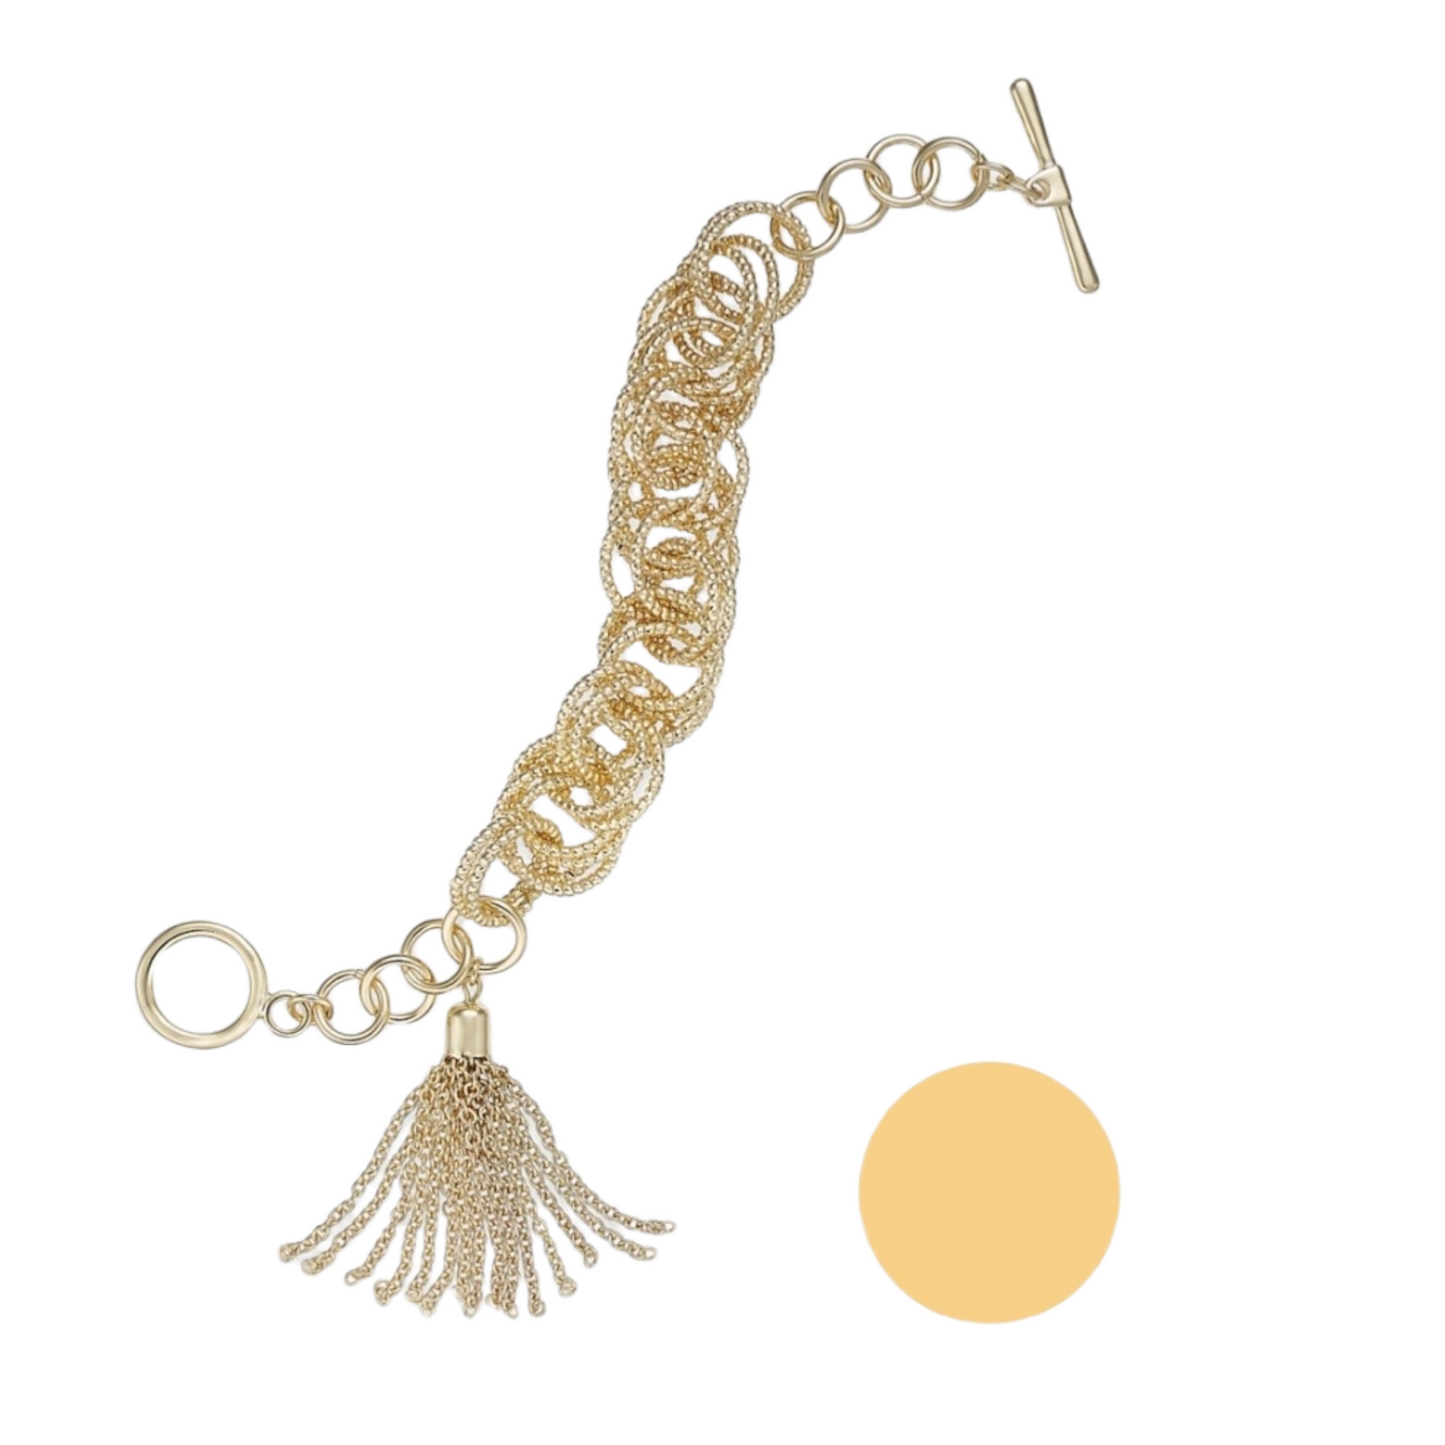 Concepts Gold-Tone Multi-Ring & Chain Tassel Toggle
Bracelet